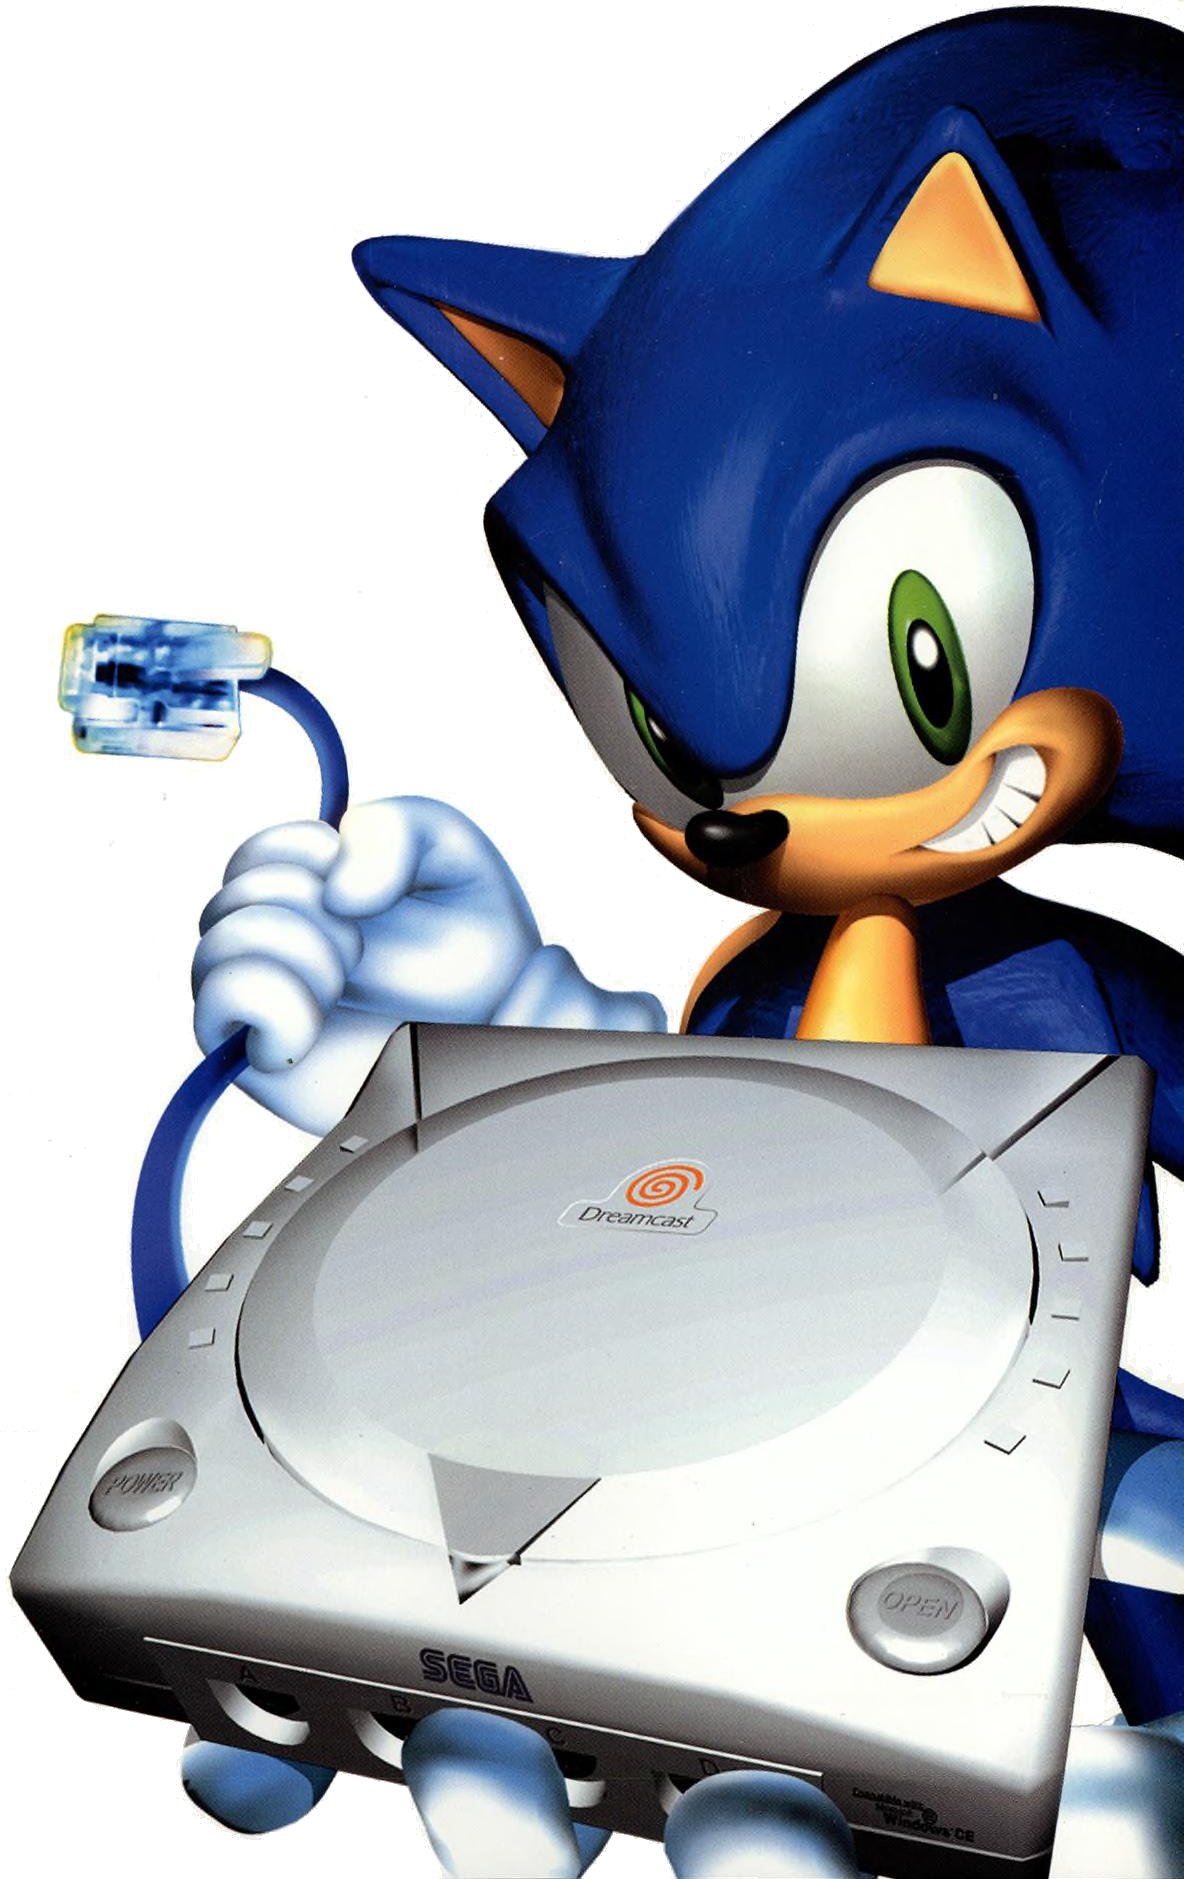 Sonic на dreamcast русский. Sonic Adventure 1998. Dreamcast Sonic. Сега. Хитрый Соник.